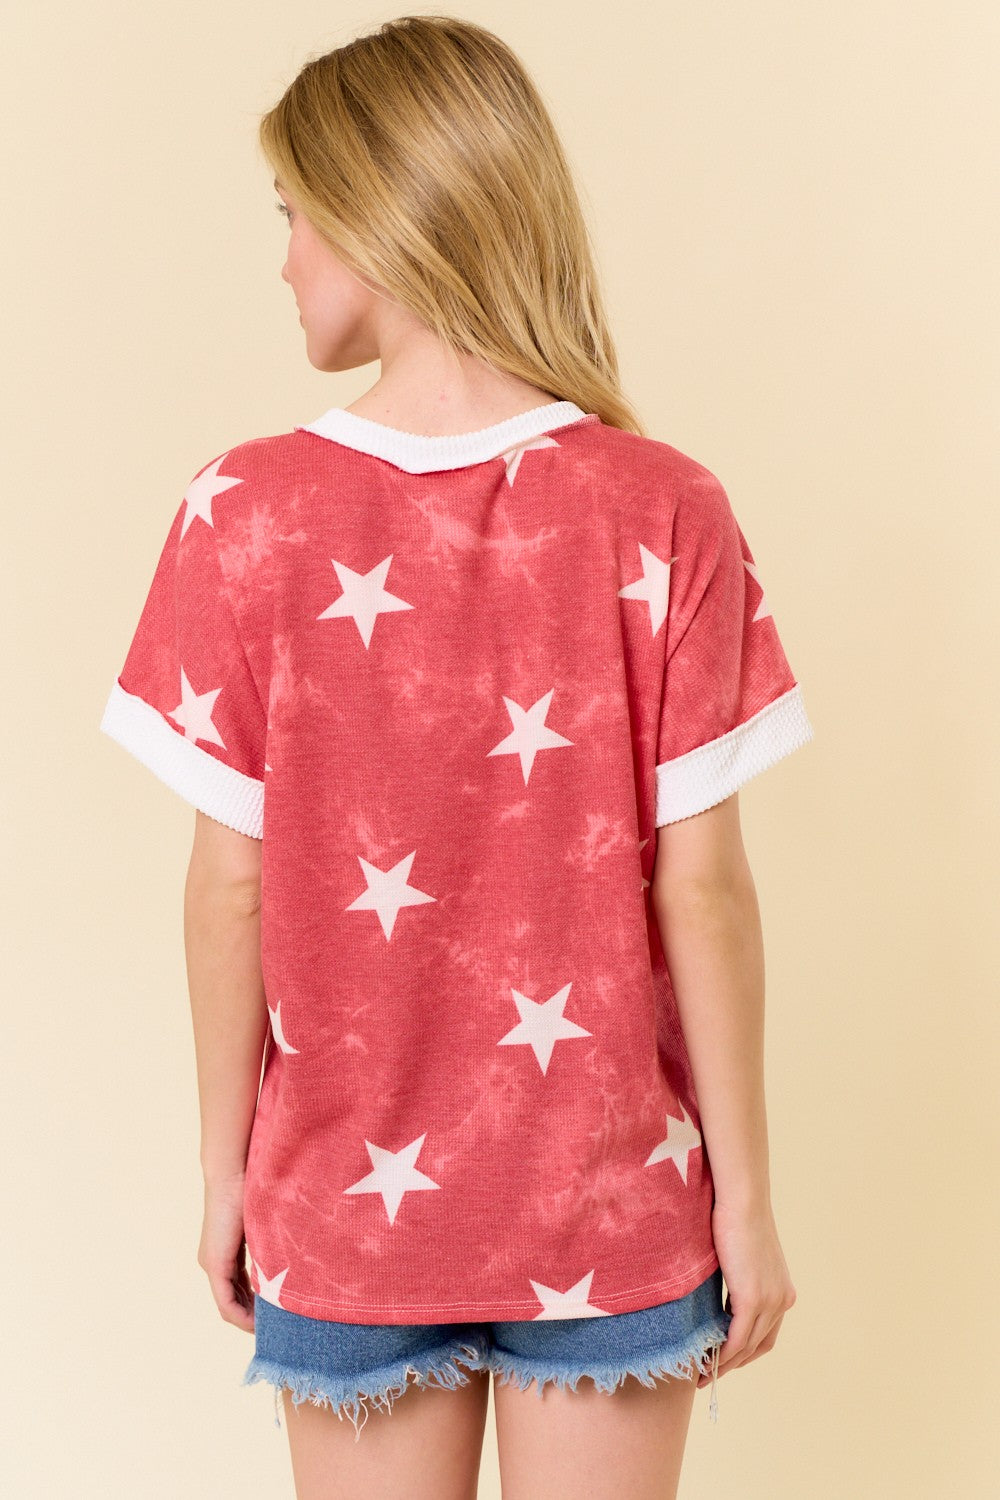 All stars Shirt